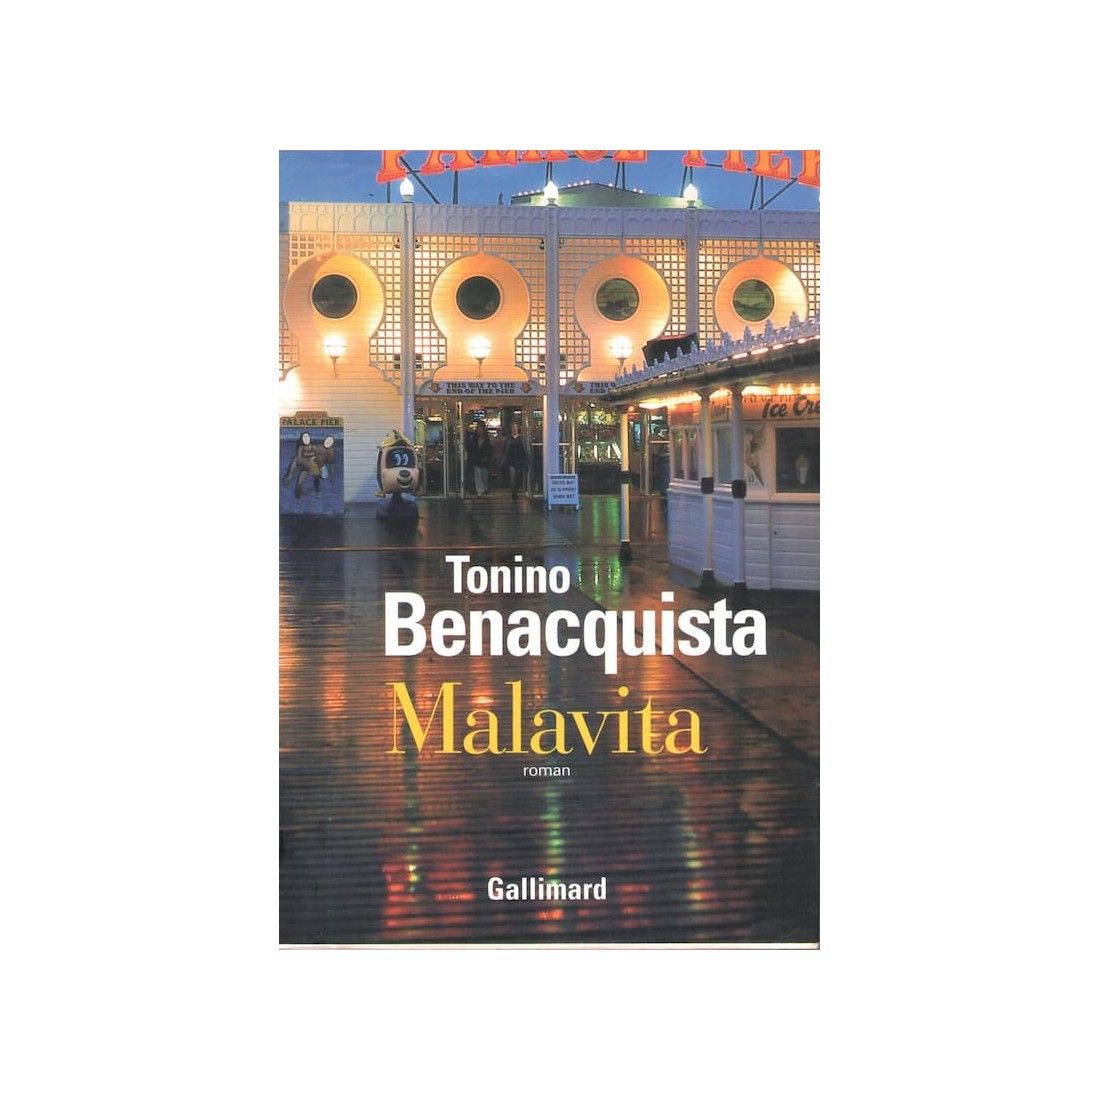 Malavita - Roman de Tonino Benacquista - Ocazlivres.com